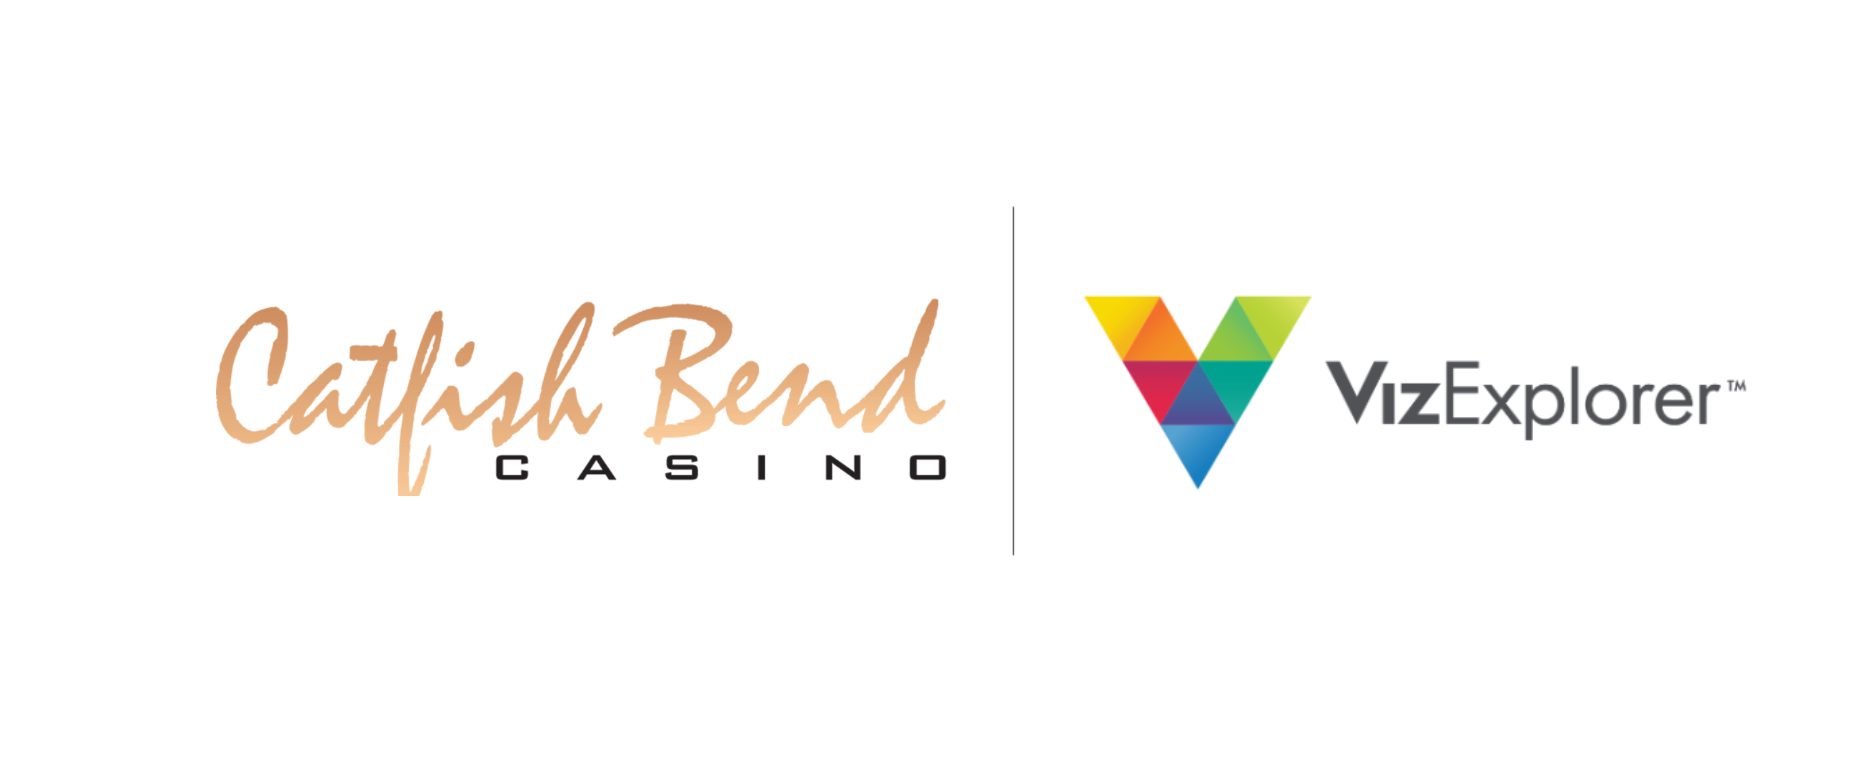 Catfish Bend Casino & VizExplorer